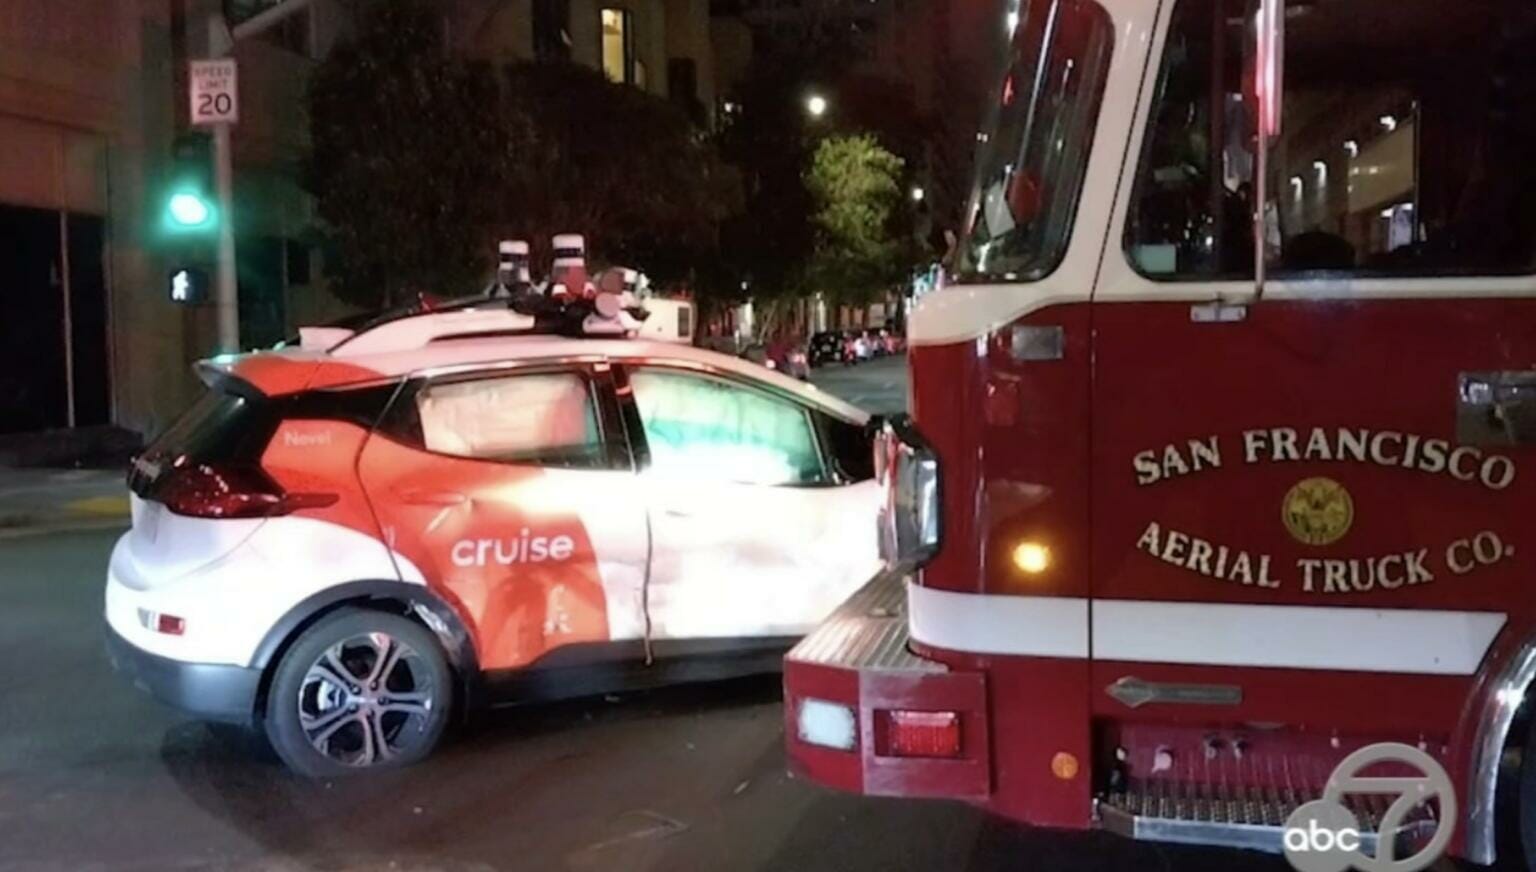 gm-cruise-san-francisco-fire-truck-emergency-vehicle-crash